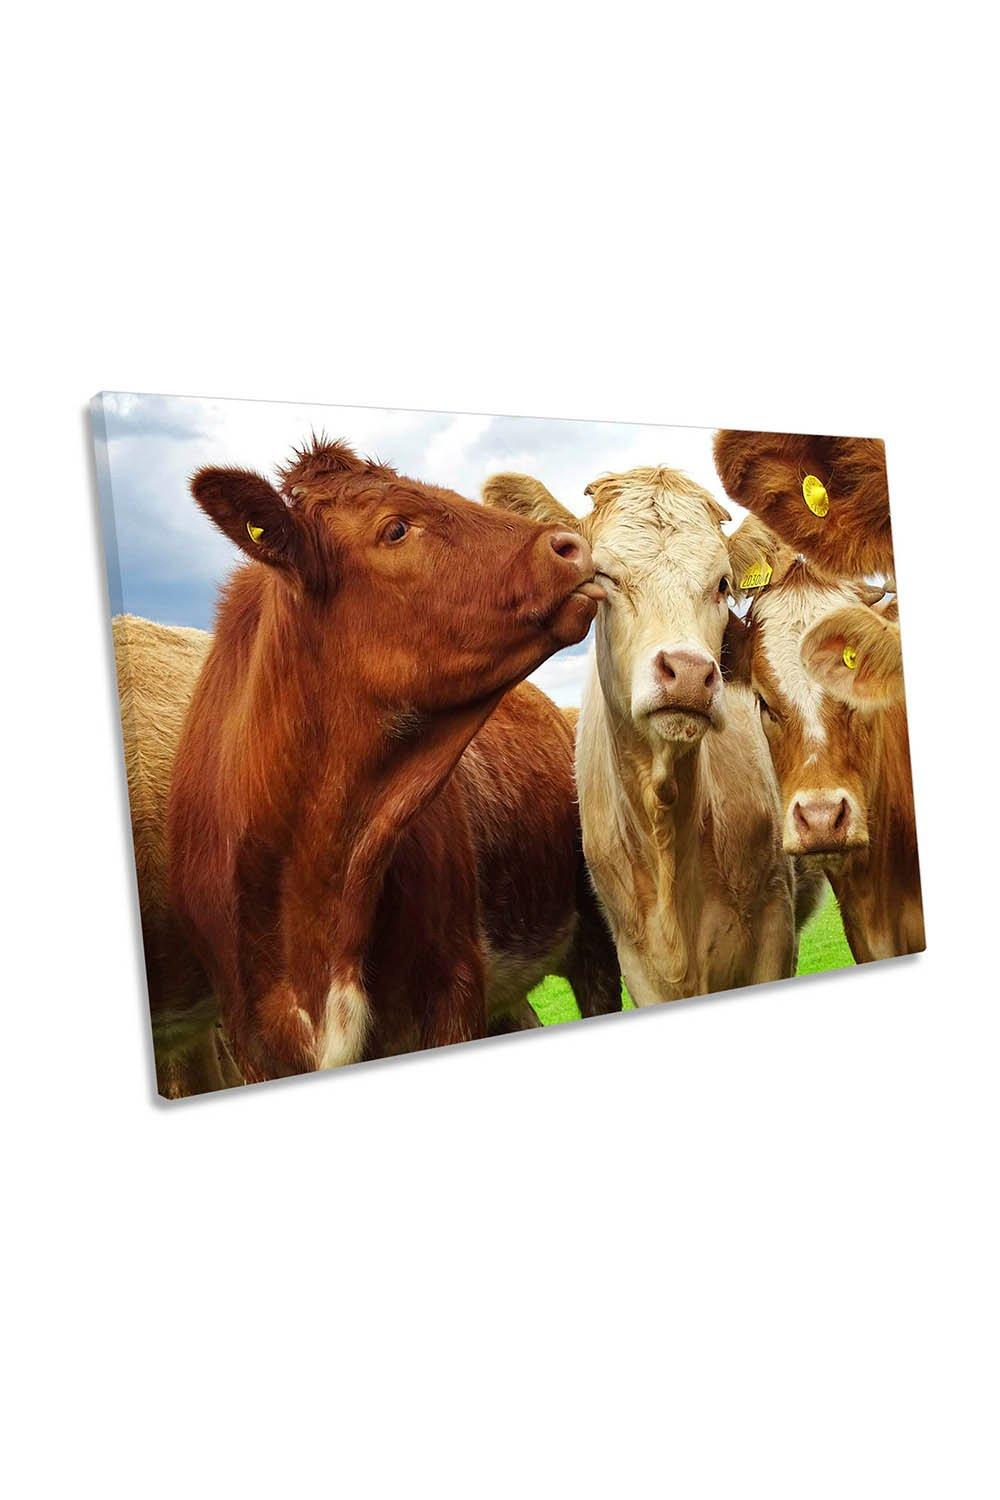 Pre Shoot Cows Humour Farm Canvas Wall Art Picture Print